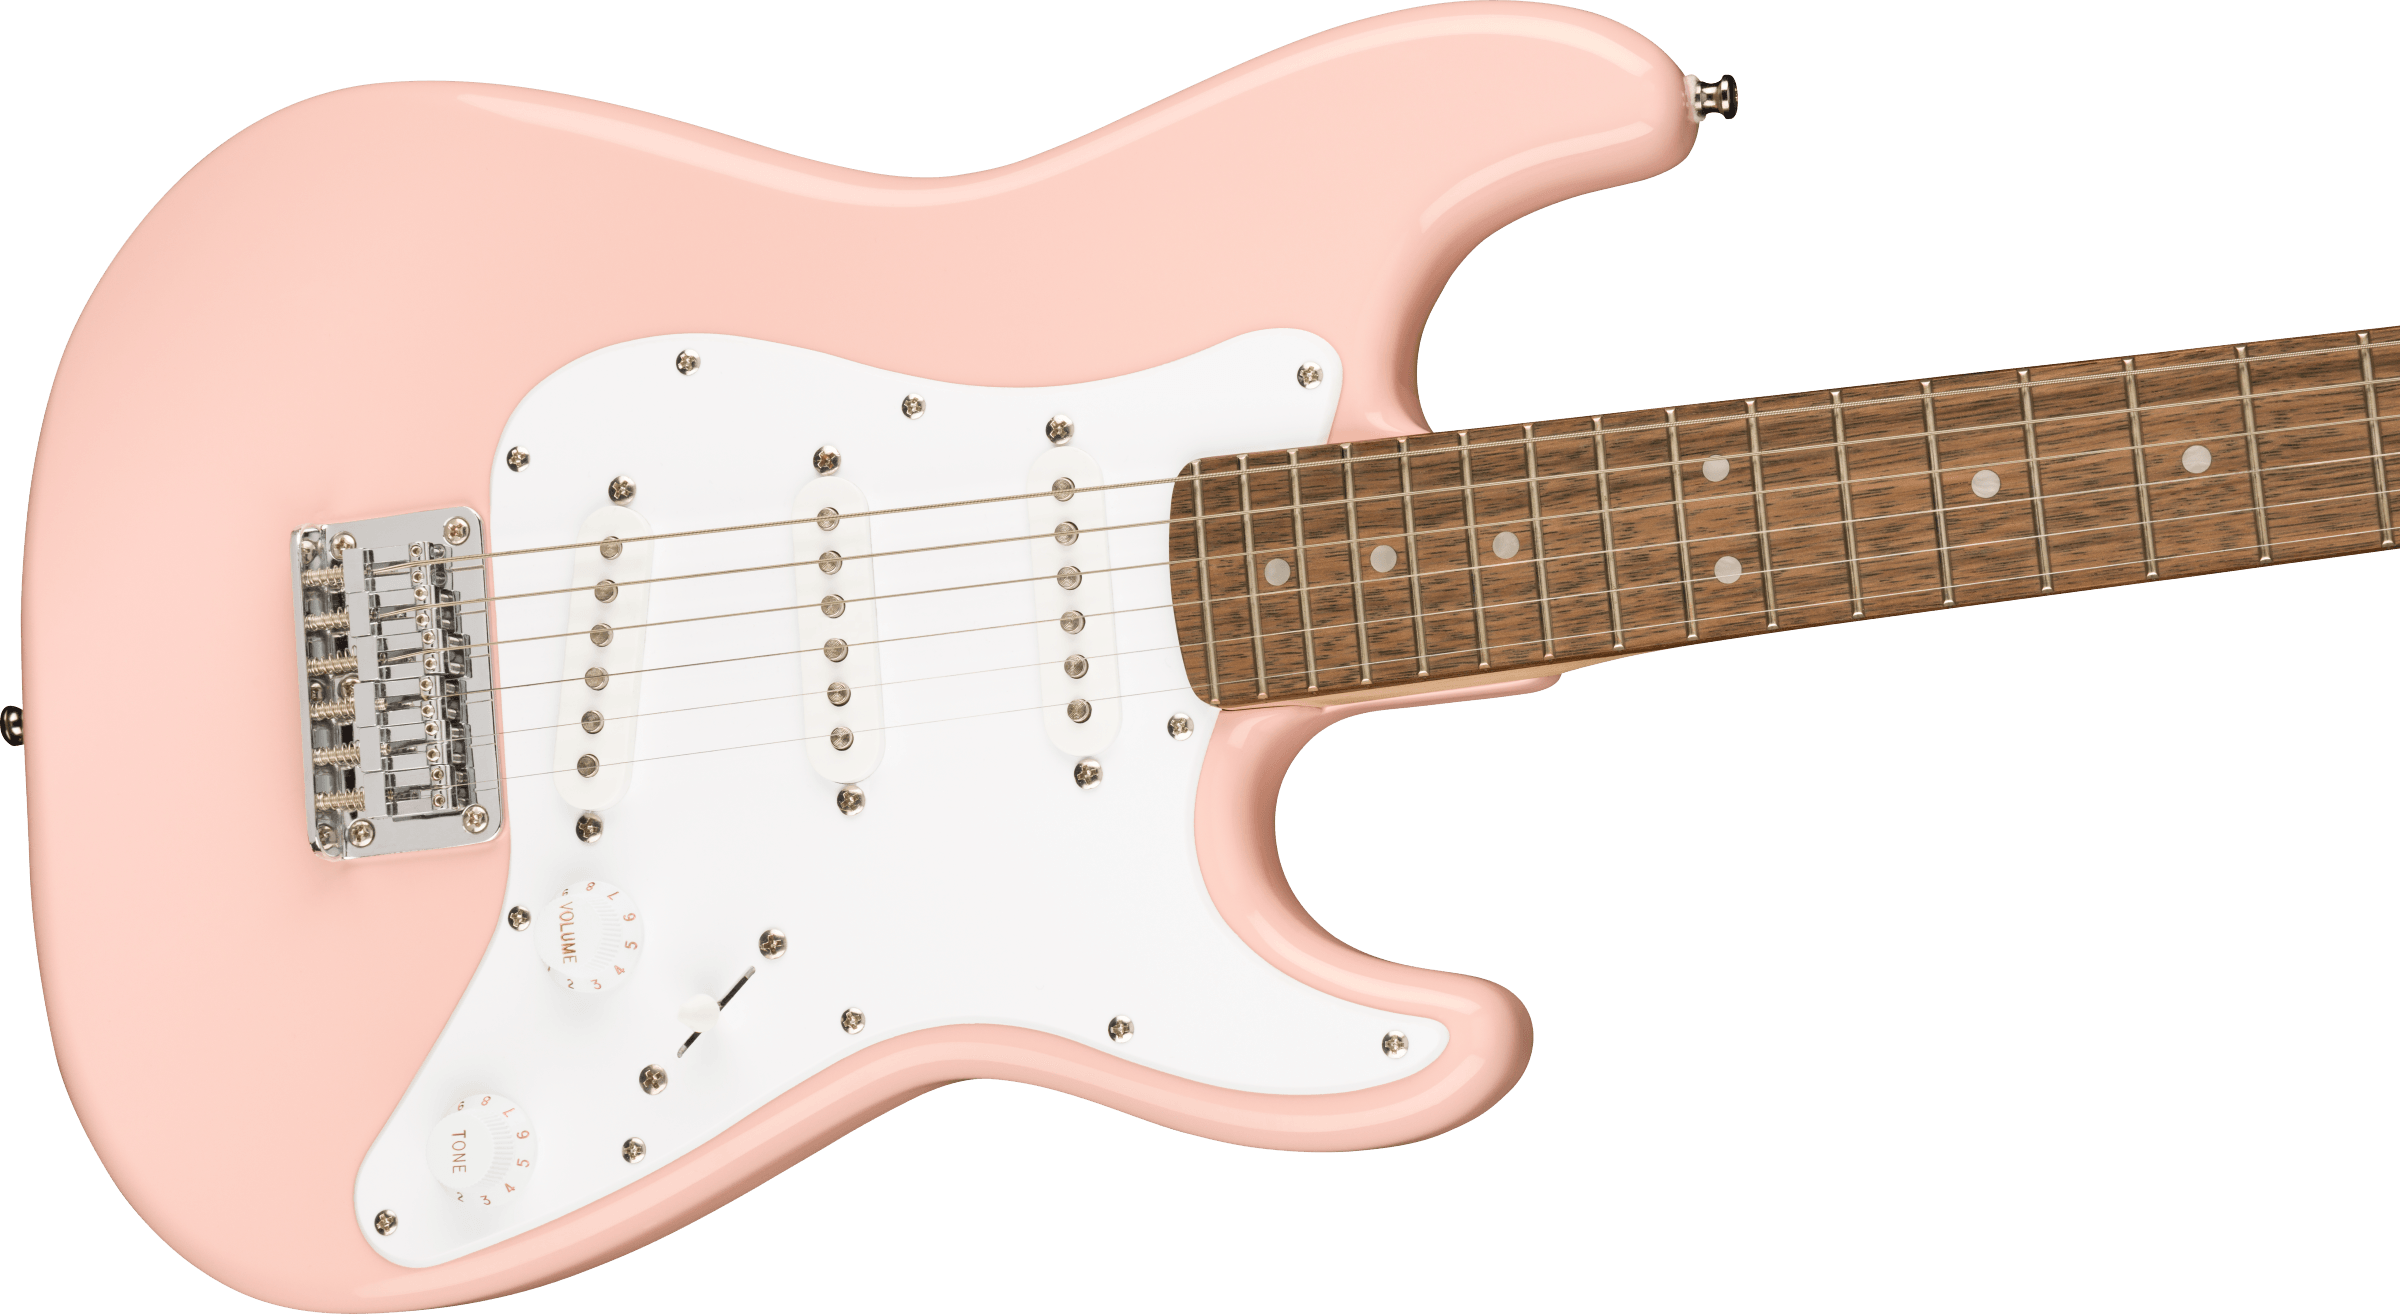 Fender Squier Mini Stratocaster®, Laurel Fingerboard (Shell Pink) - Electric Guitar 電結他